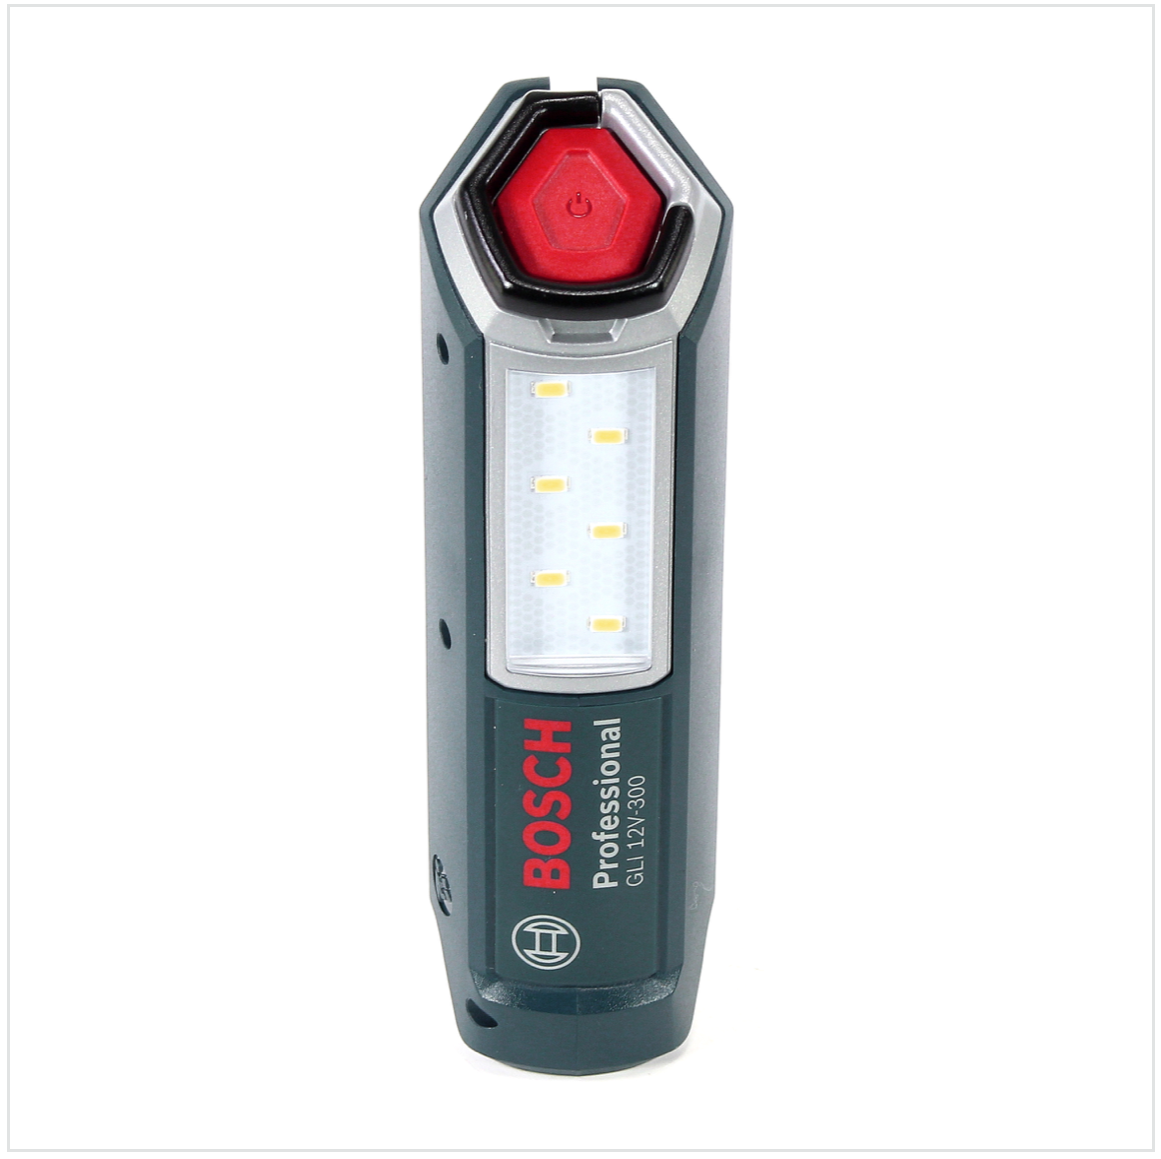 Bosch Professional GLI 18V-300 Lampe sans fil + 1x Batterie GBA 18 V 4,0